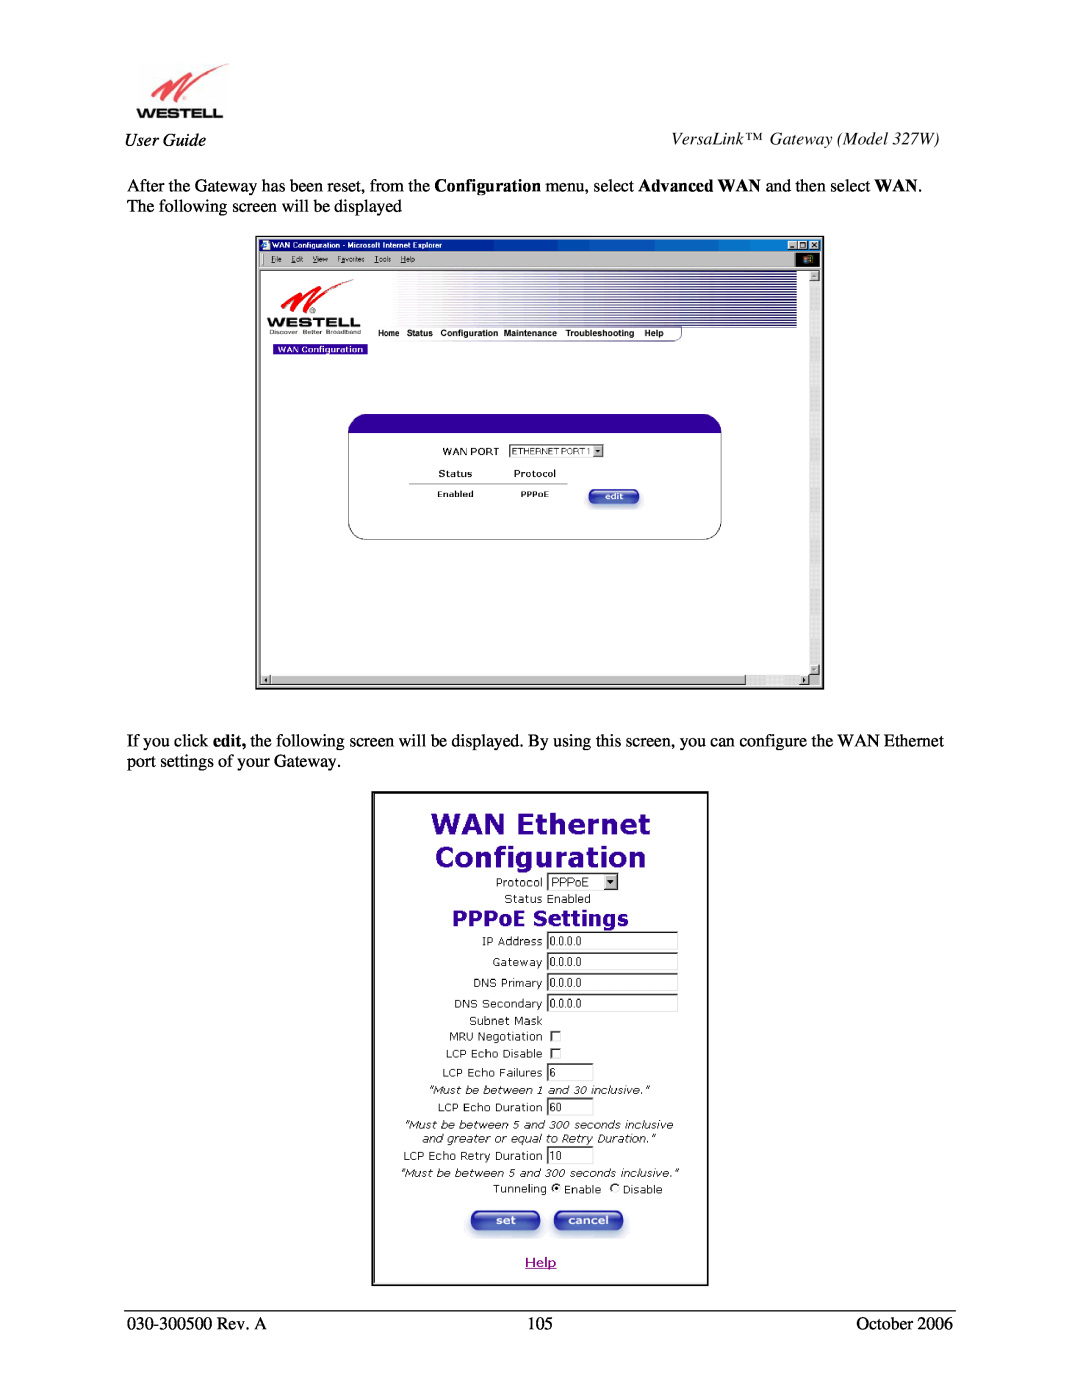 Westell Technologies manual User Guide, VersaLink Gateway Model 327W, 030-300500 Rev. A, October 